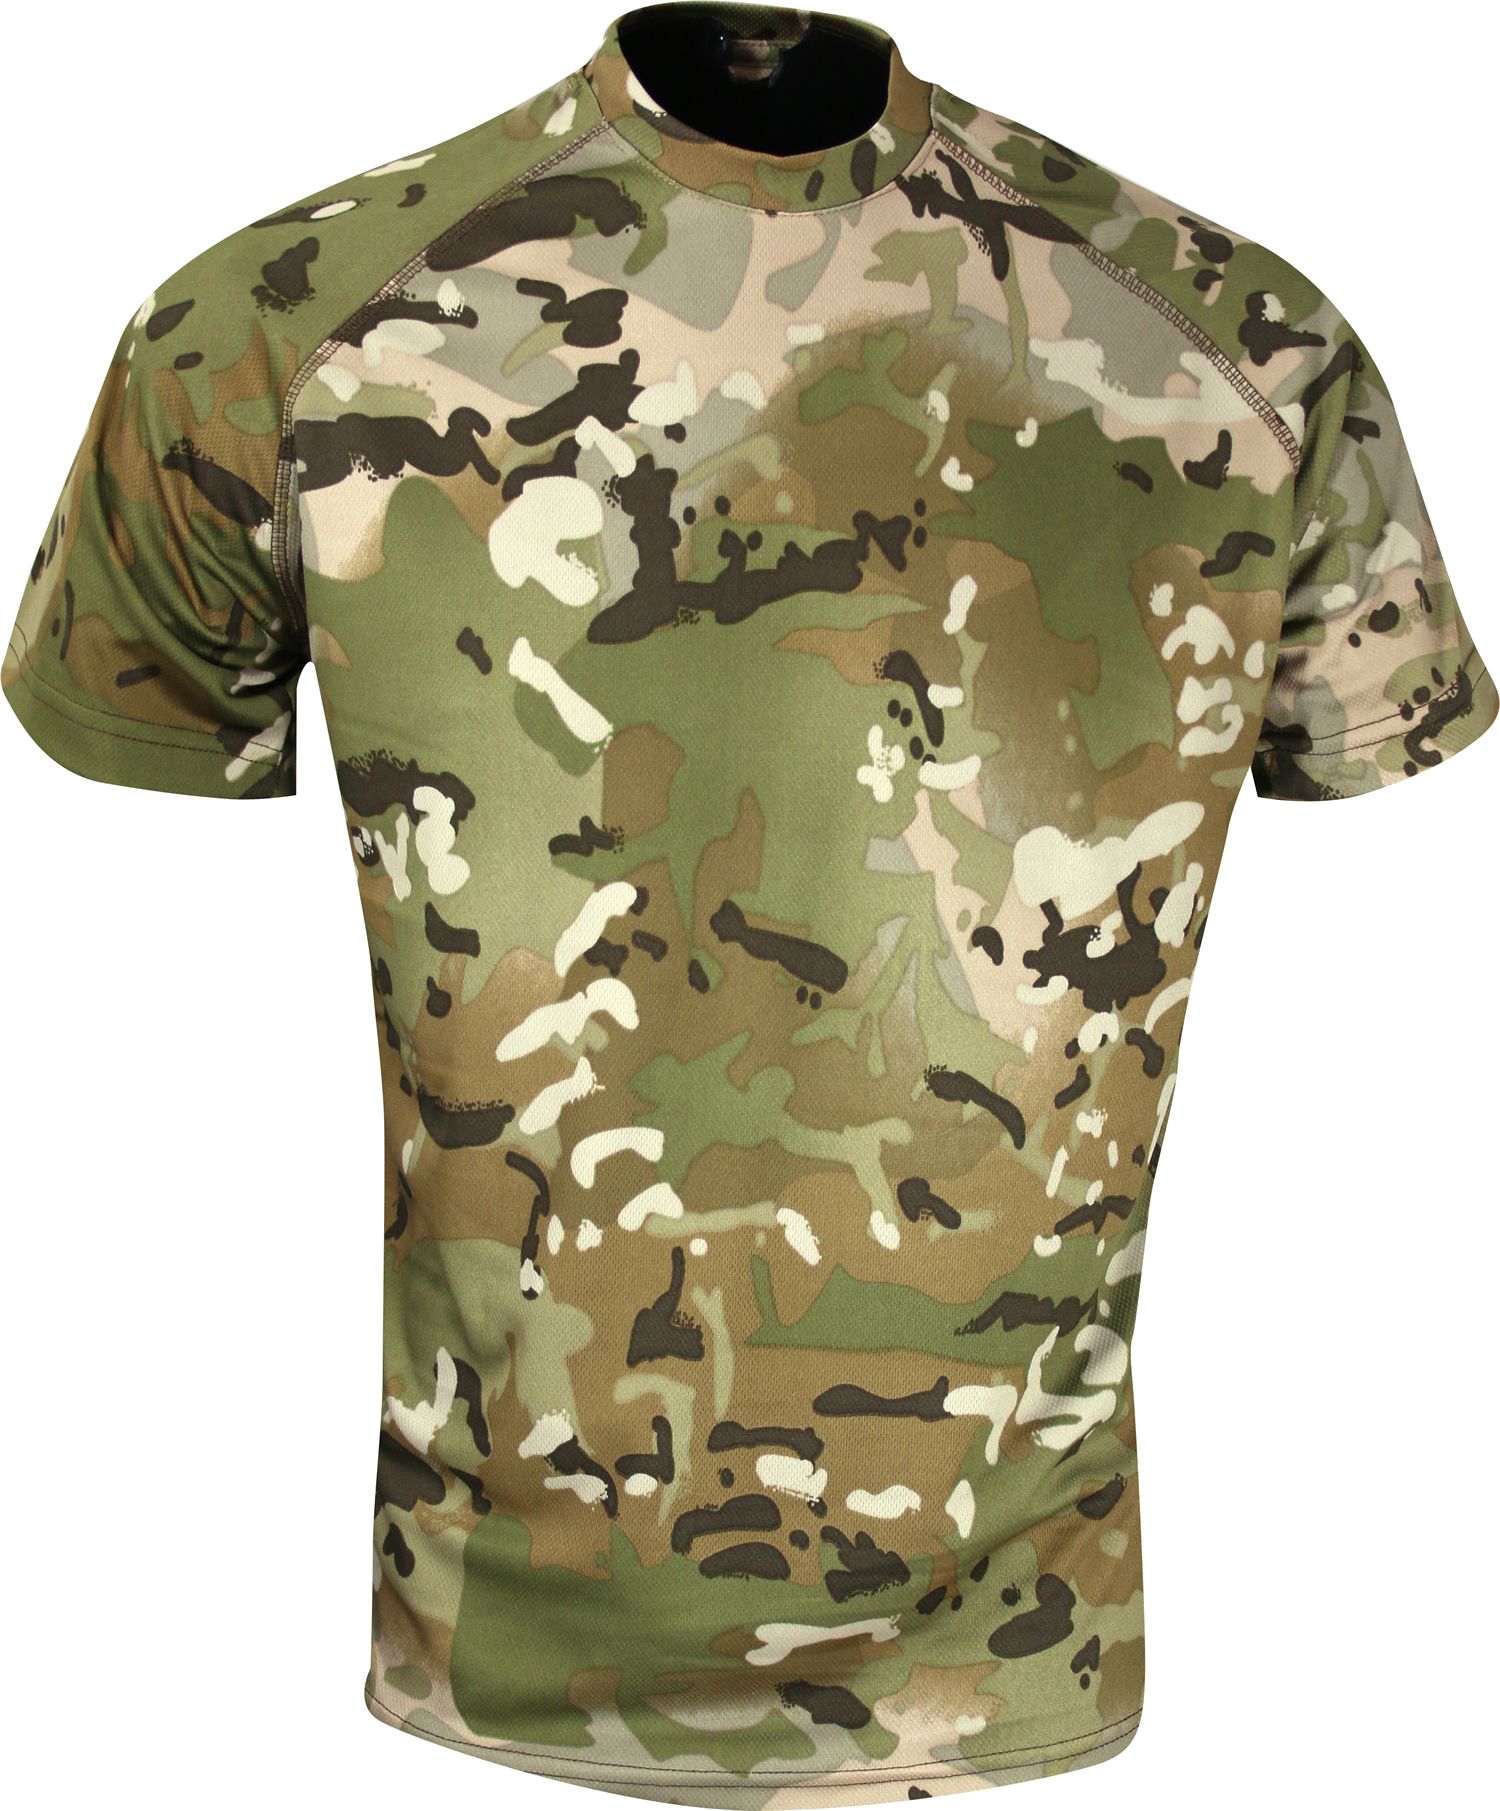 Viper Mesh Tech T Shirt Titanium Tactical Recon Lightweight Hunting Shooting 